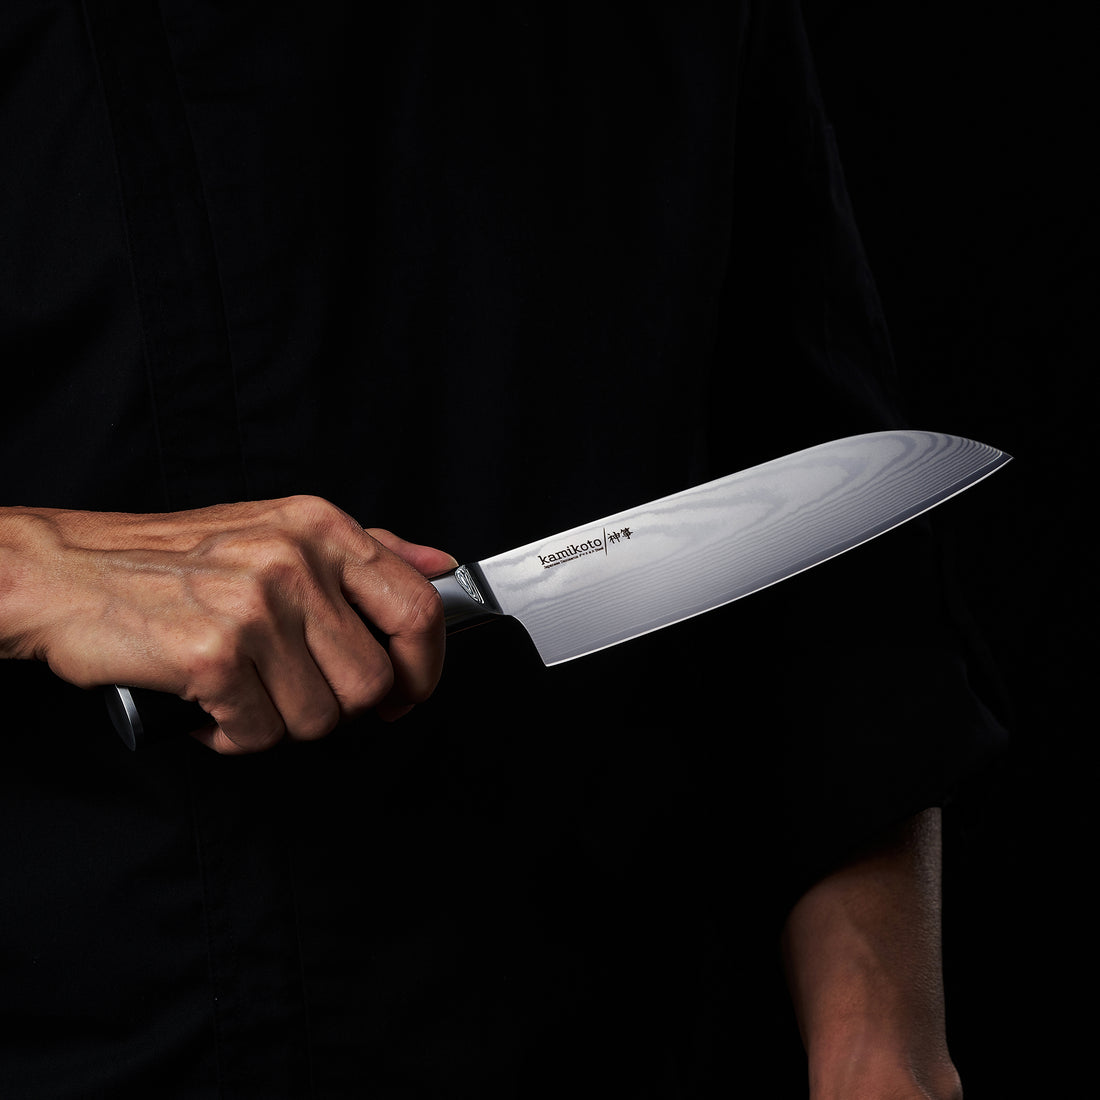  Kamikoto 7in. Santoku Chef Knife: Home & Kitchen